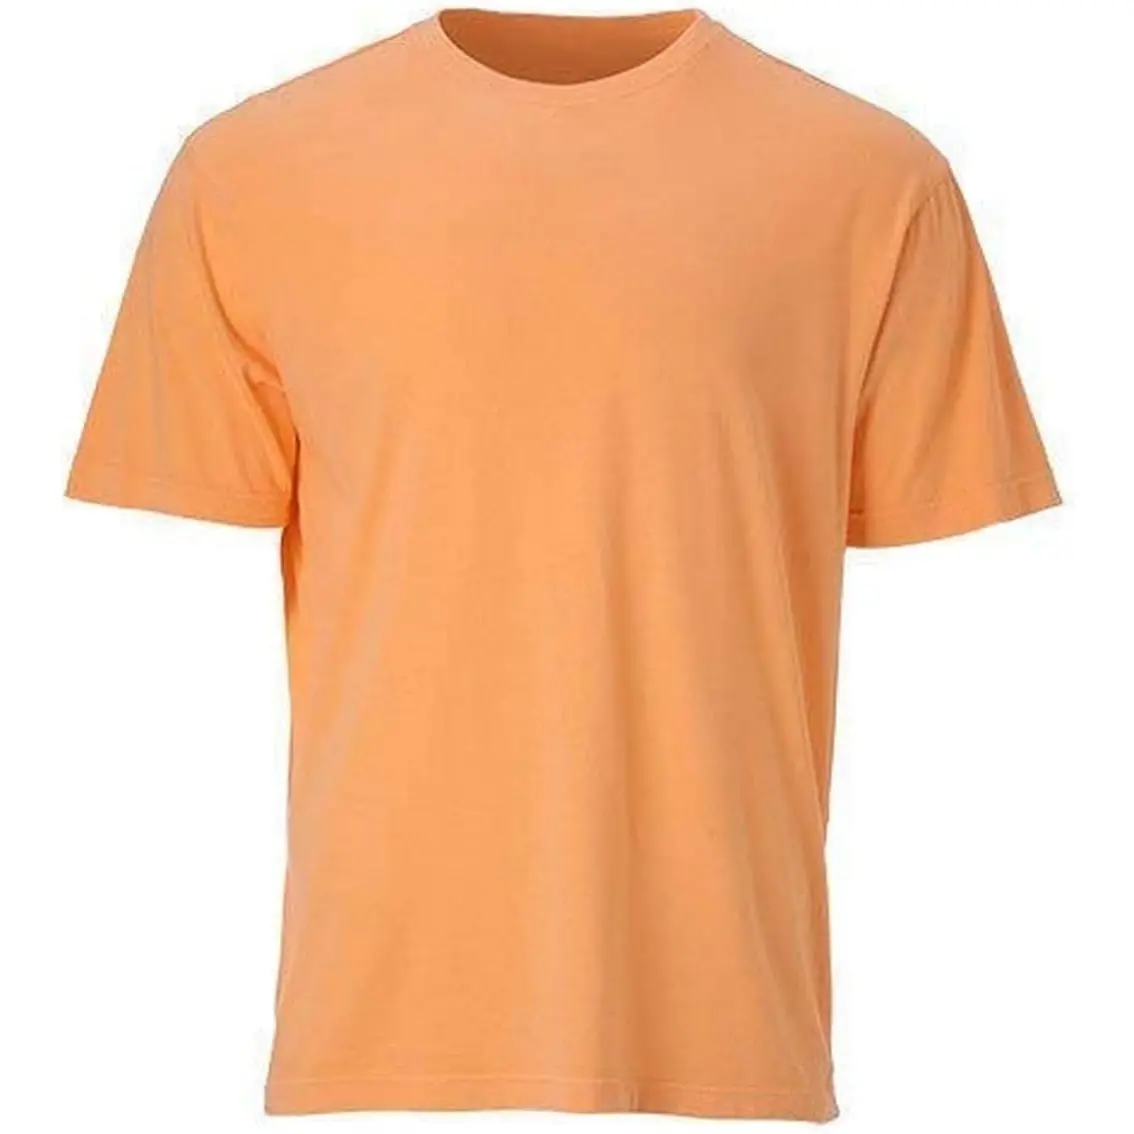 Multi-colors custom 100% cotton garment dyed unisex short sleeve t shirt